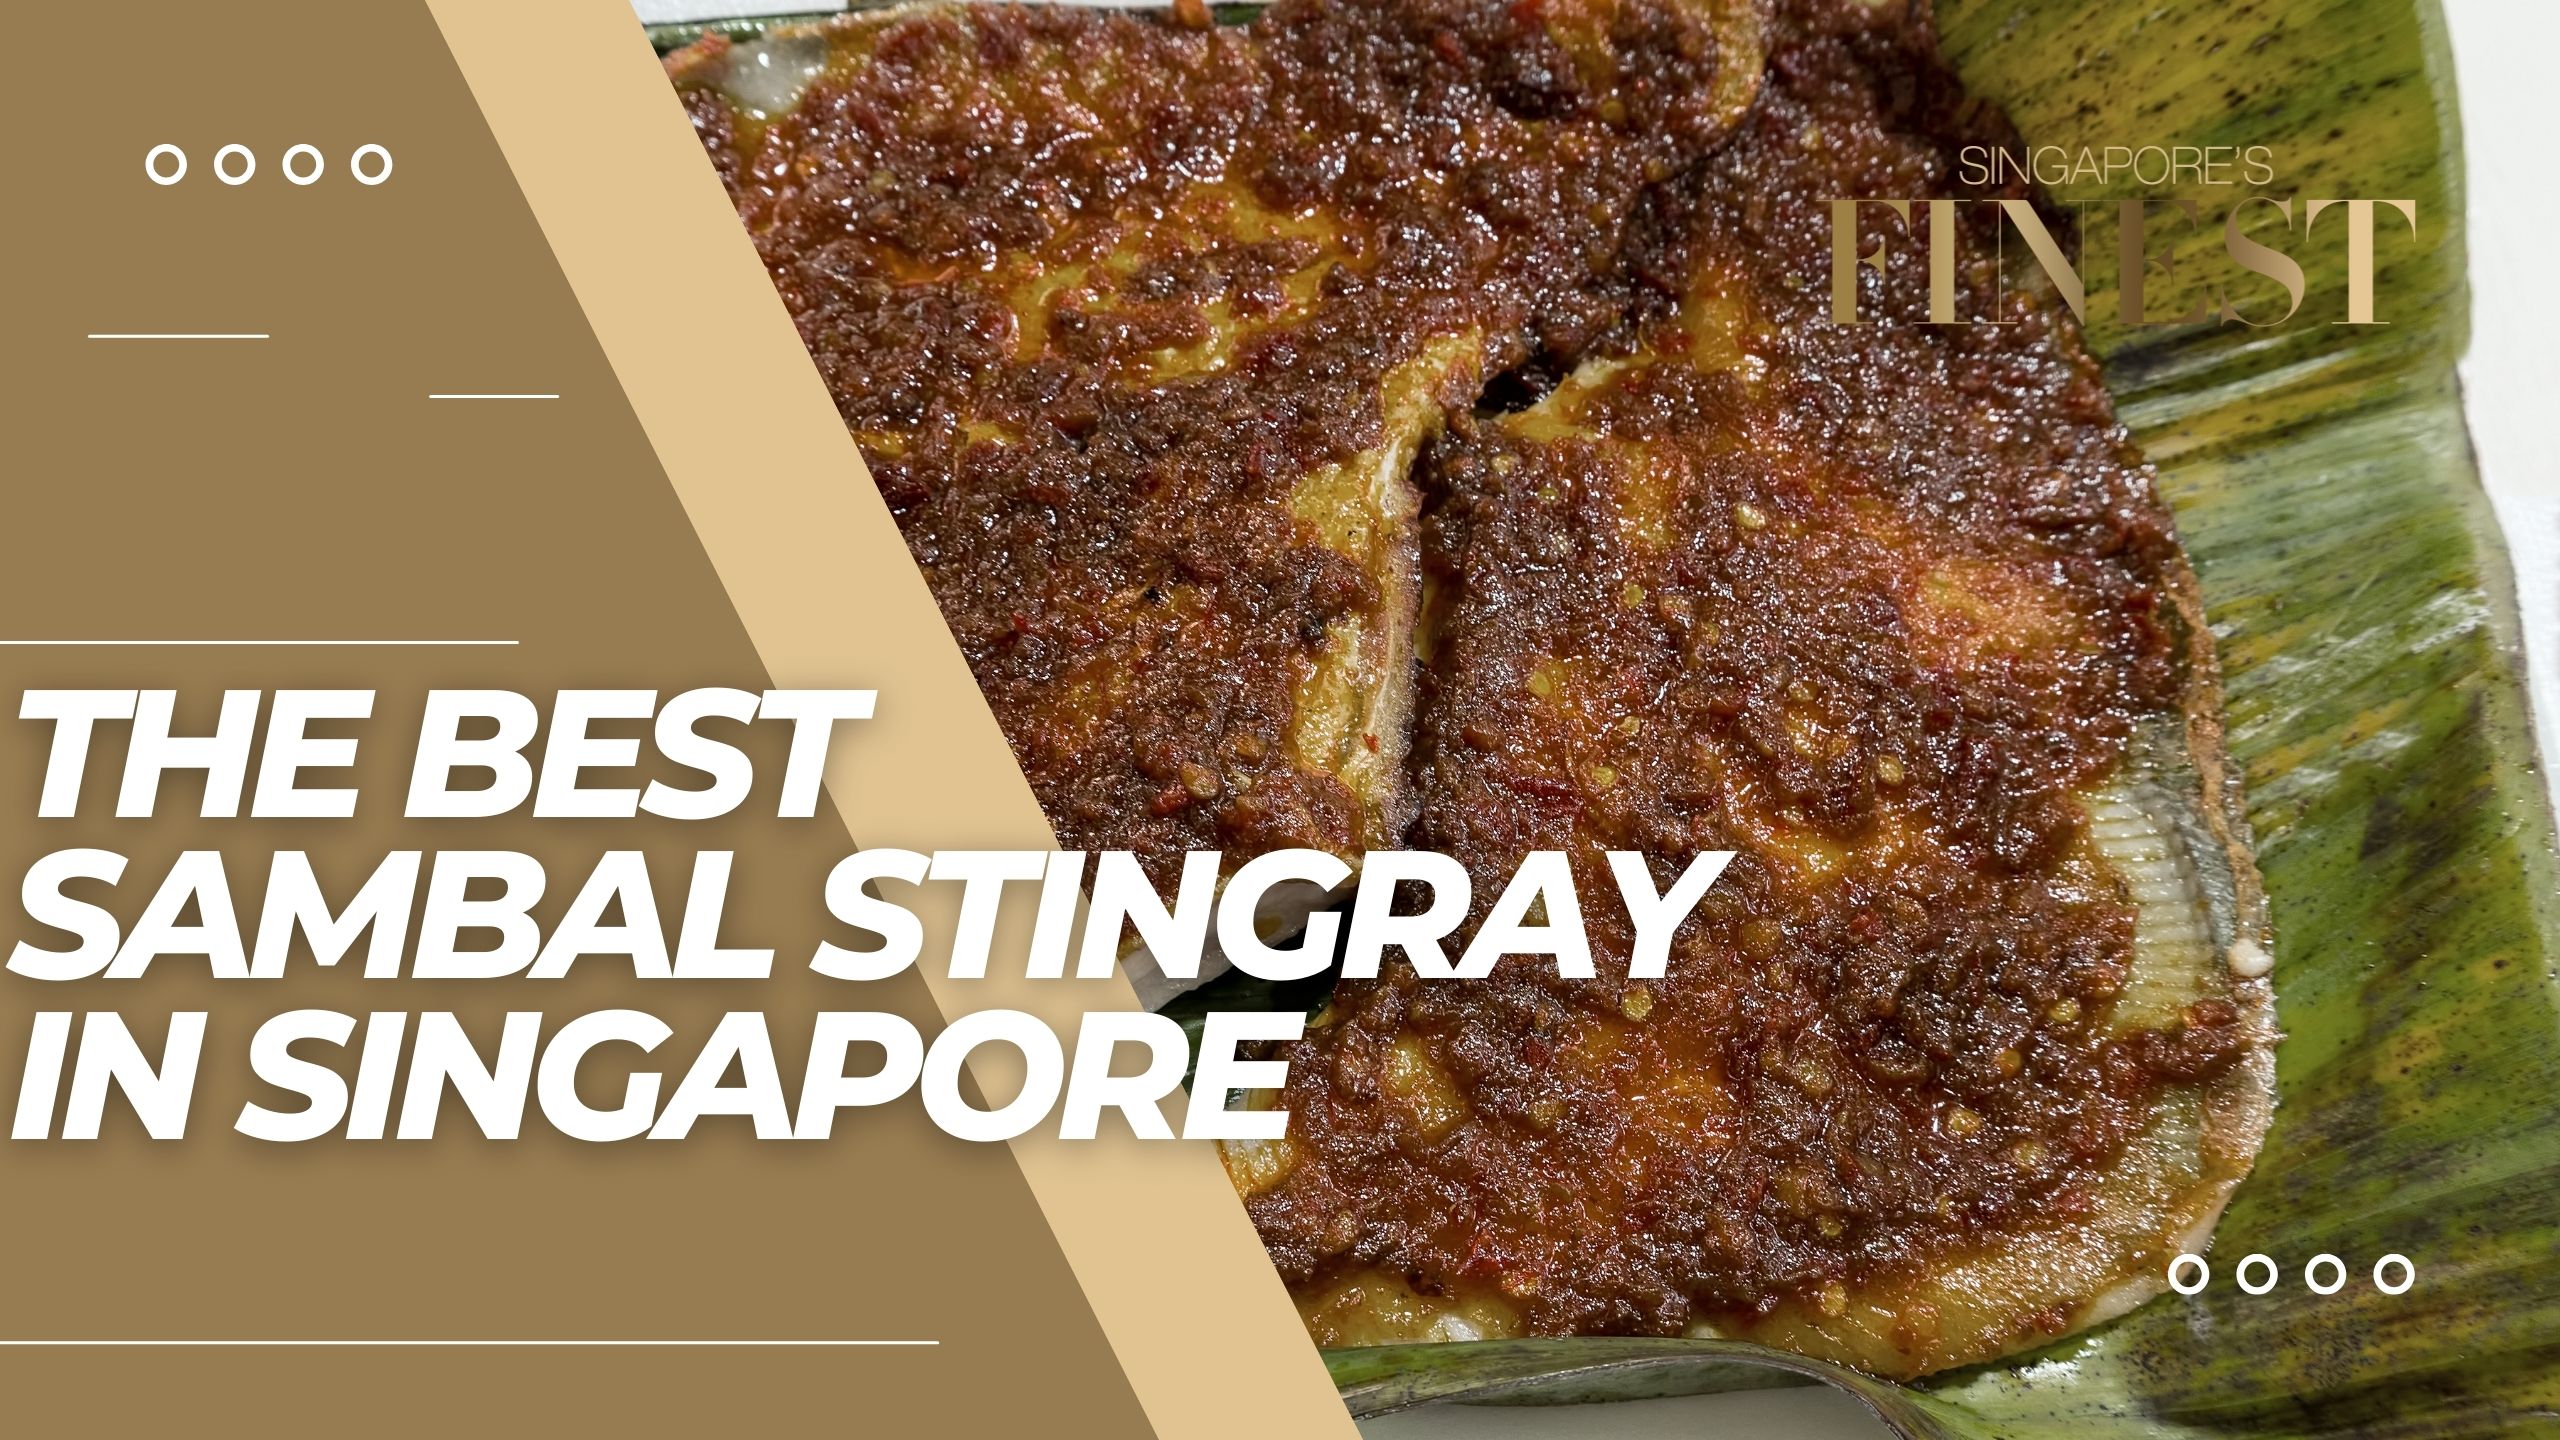 The Finest Sambal Stingray in Singapore